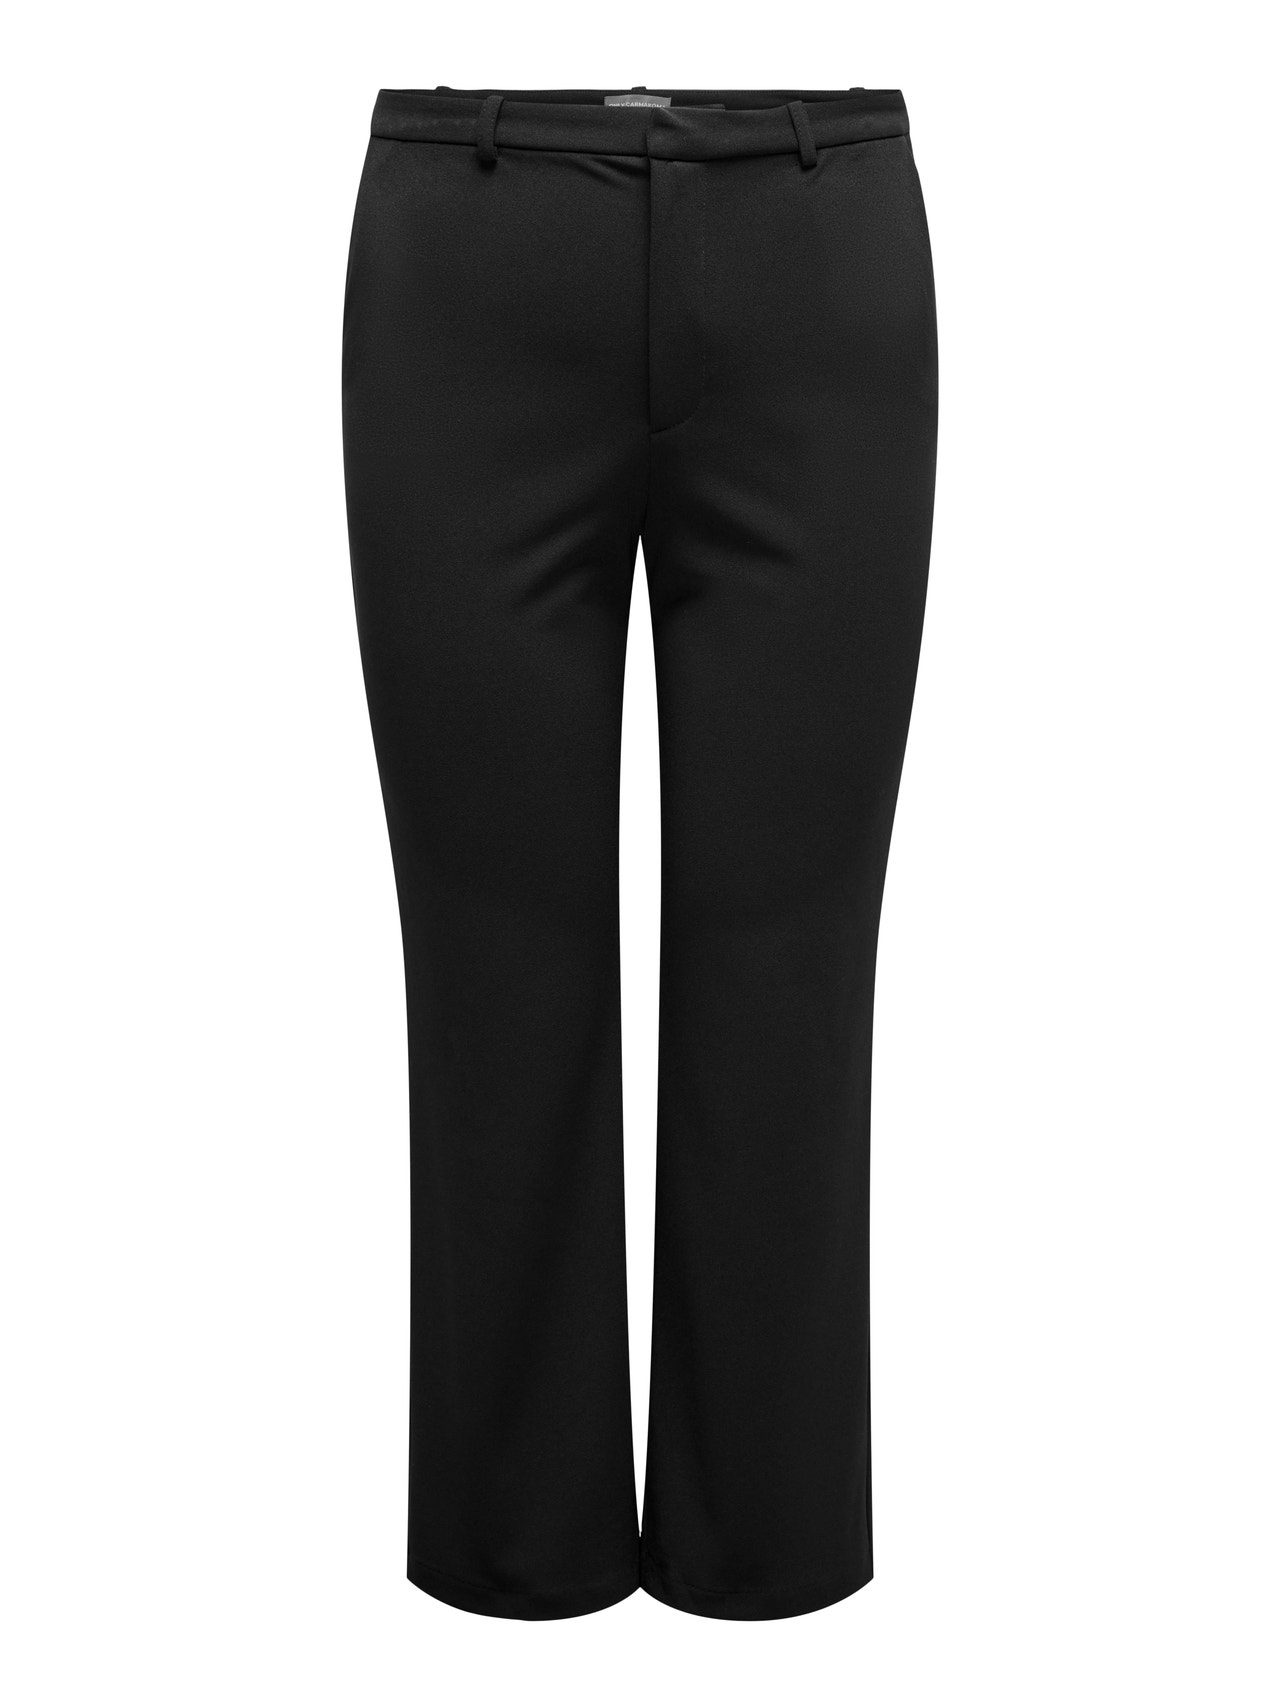 ONLY Curvy classic pants -Black - 15312245